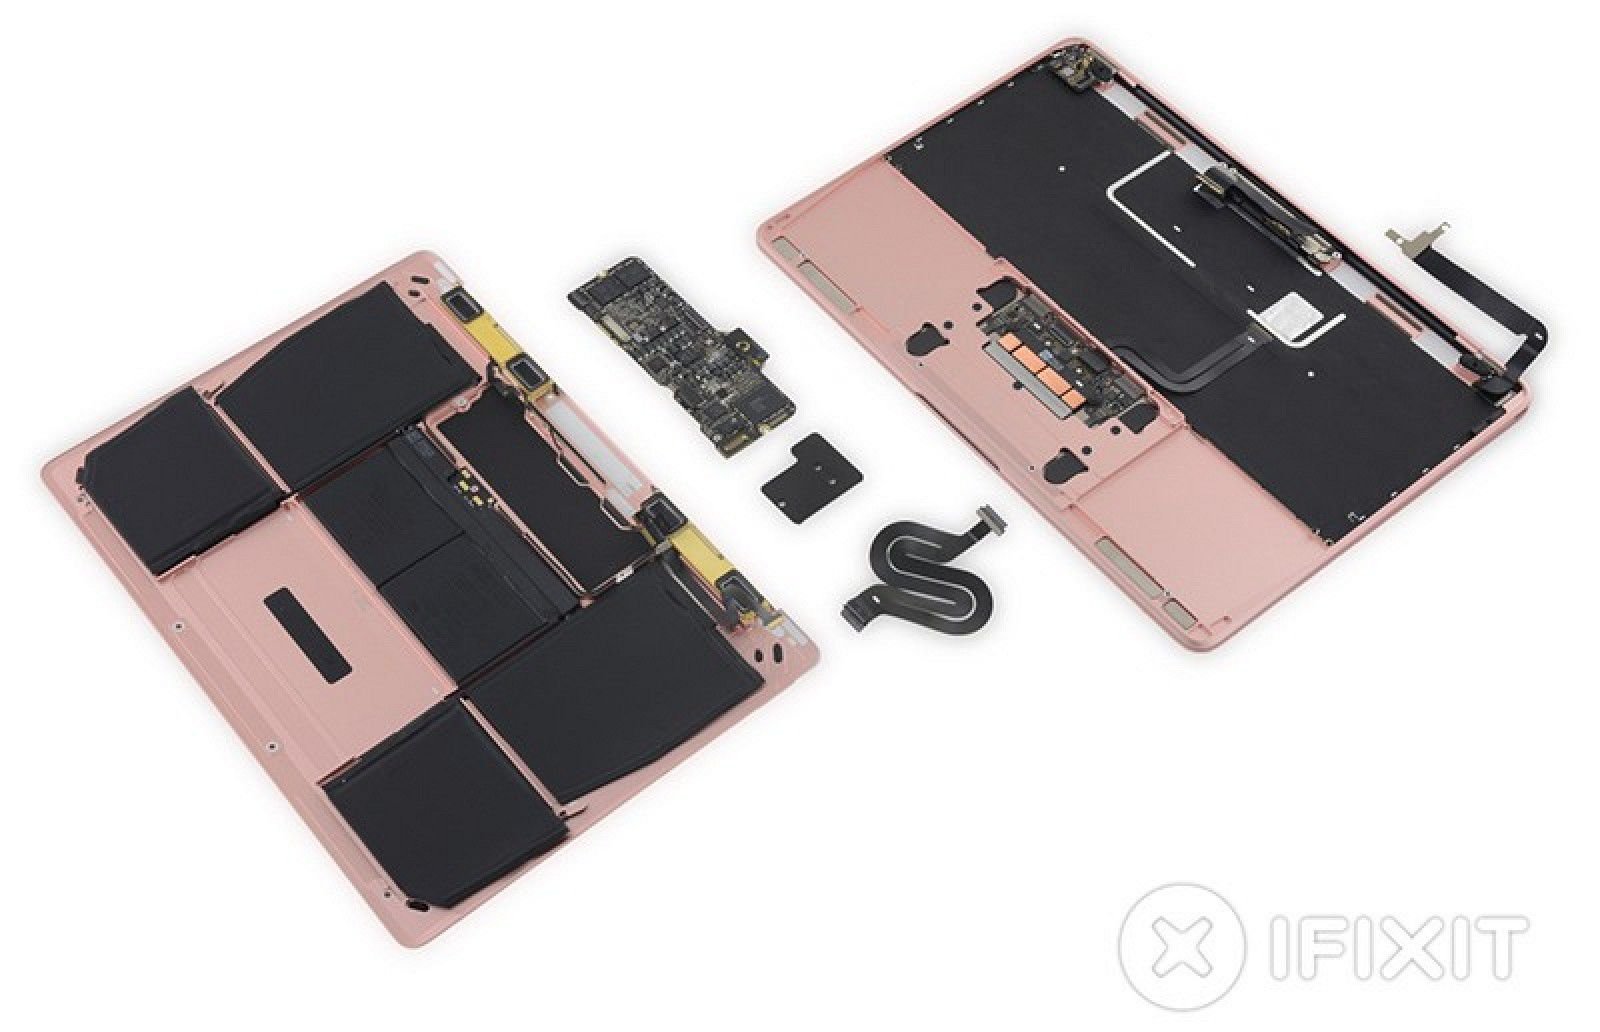 iFixit 2016 12 inch MacBook teardown